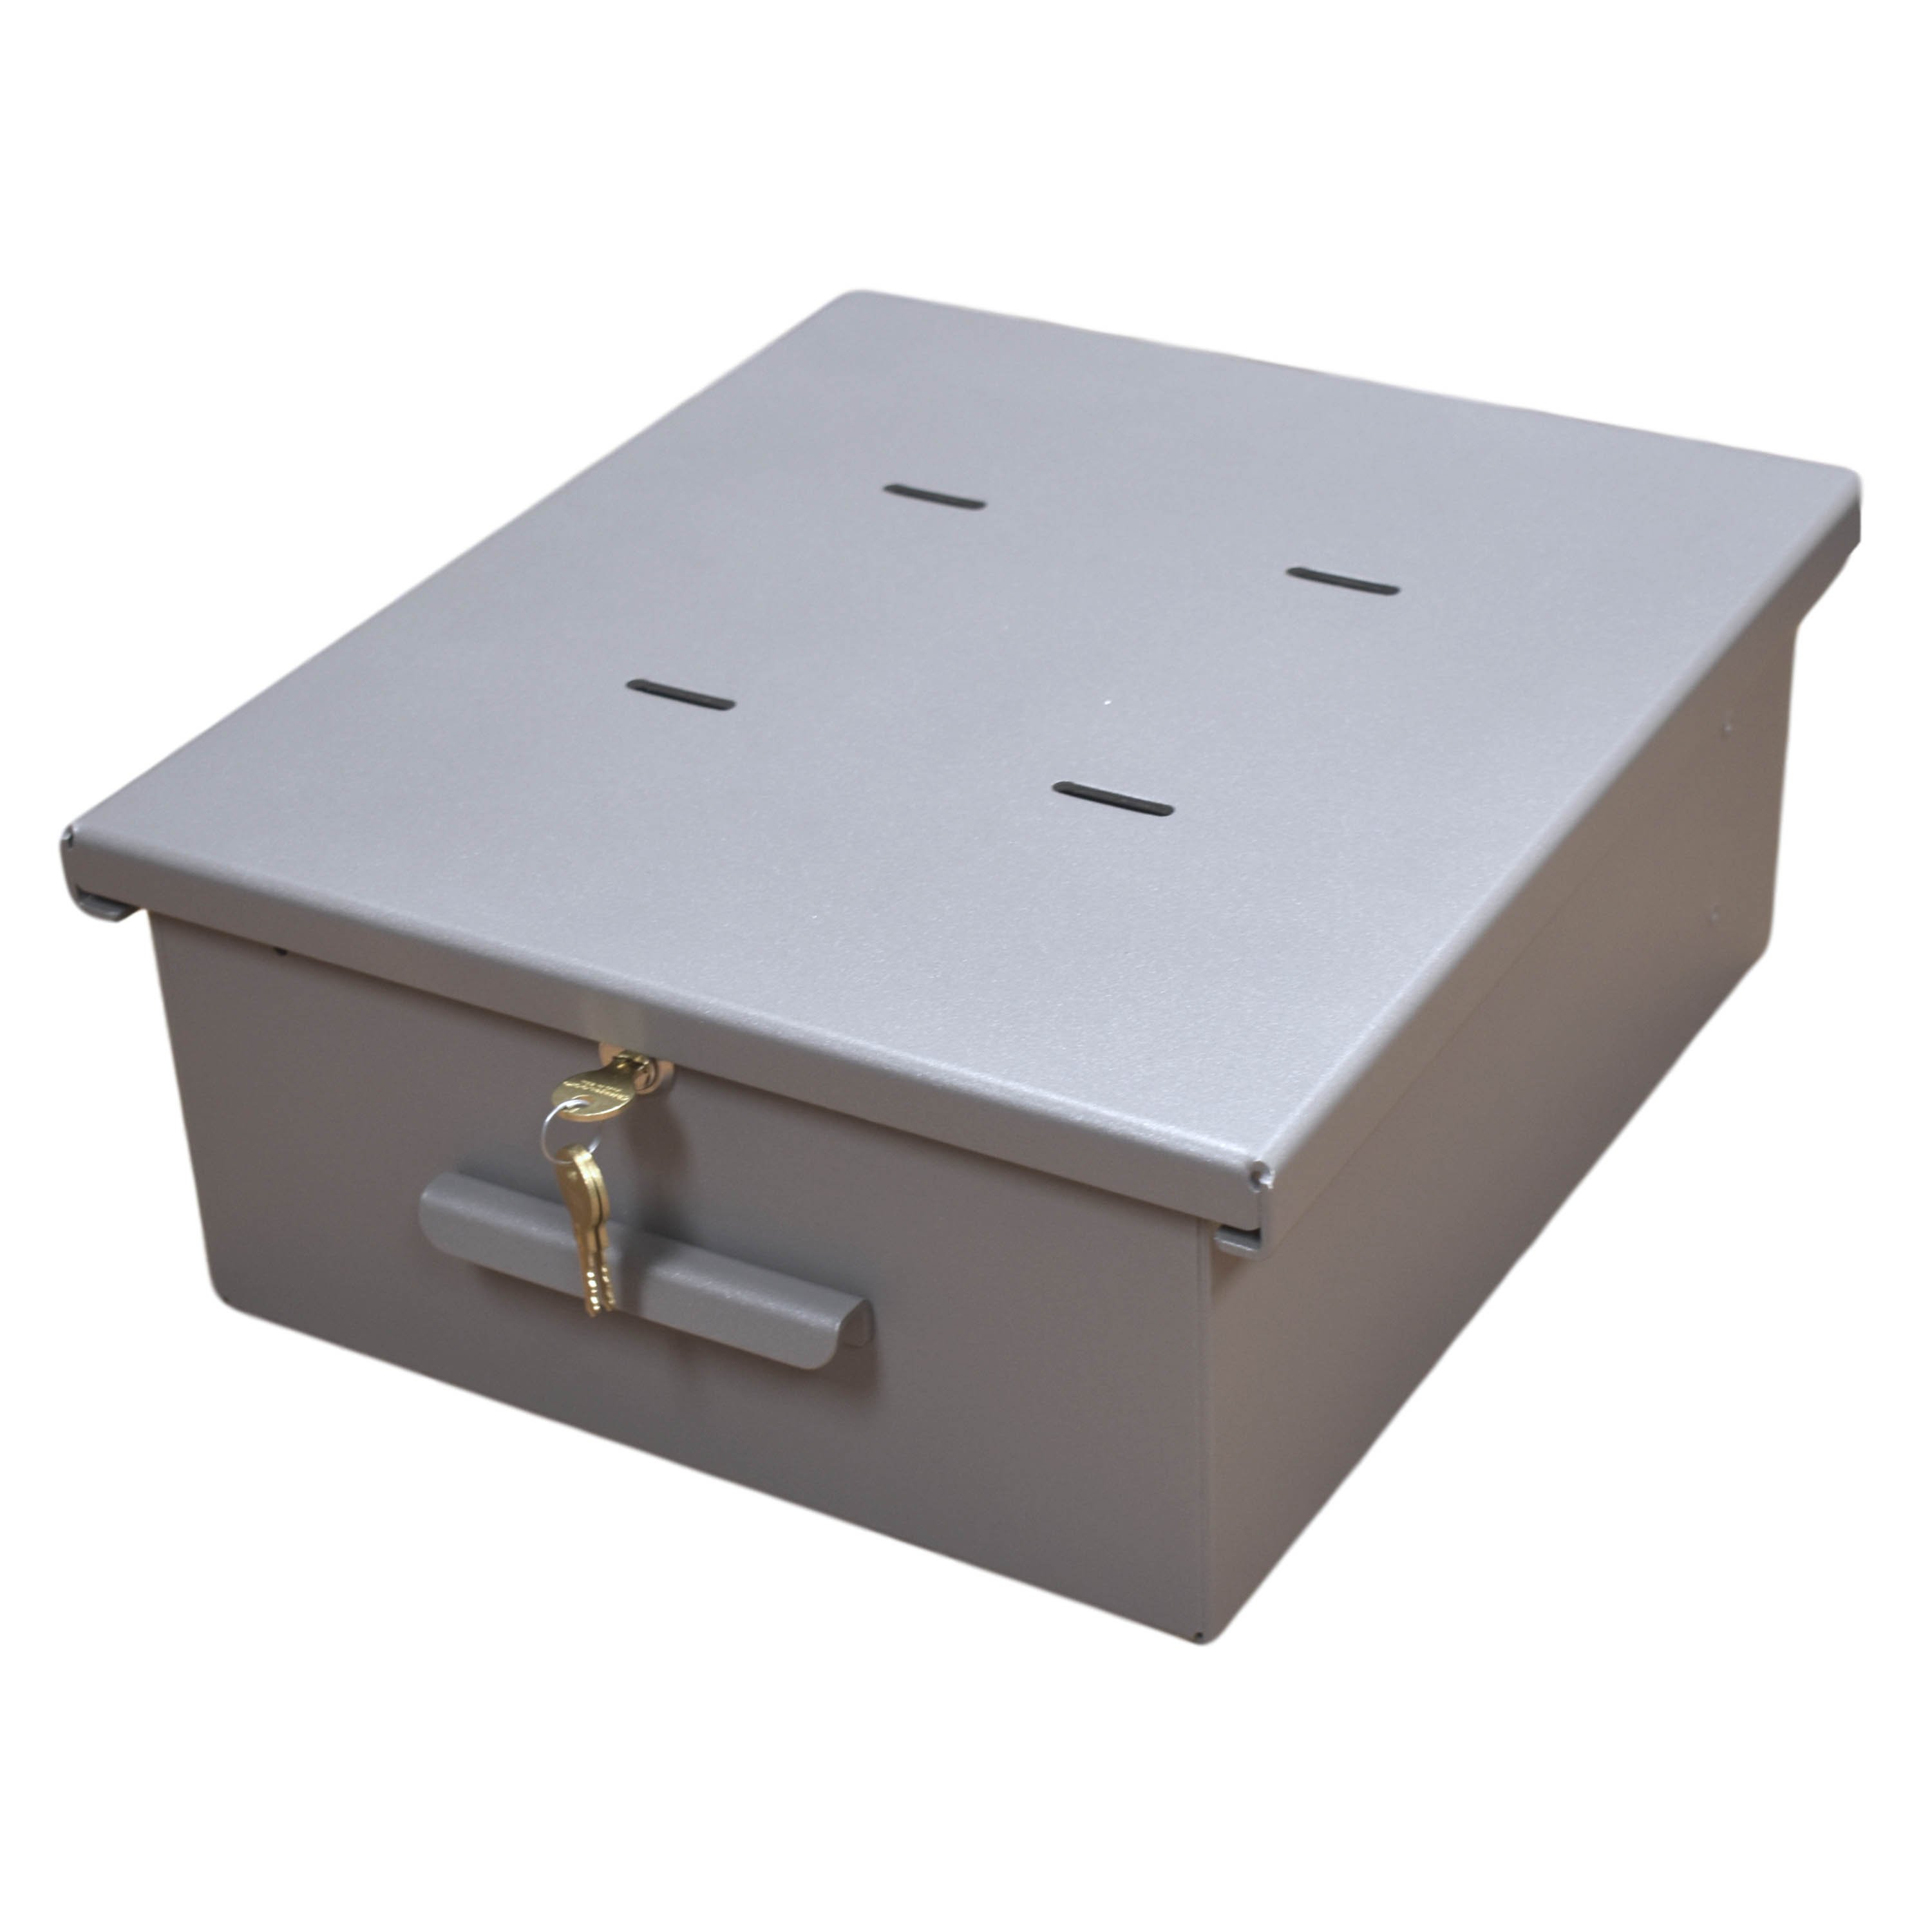 https://www.universalmedicalinc.com/media/catalog/product/cache/f176254afc5001a35a1c727280299a84/1/8/183035_large-aluminum-refrigerator-lock-box-with-key-lock.jpg